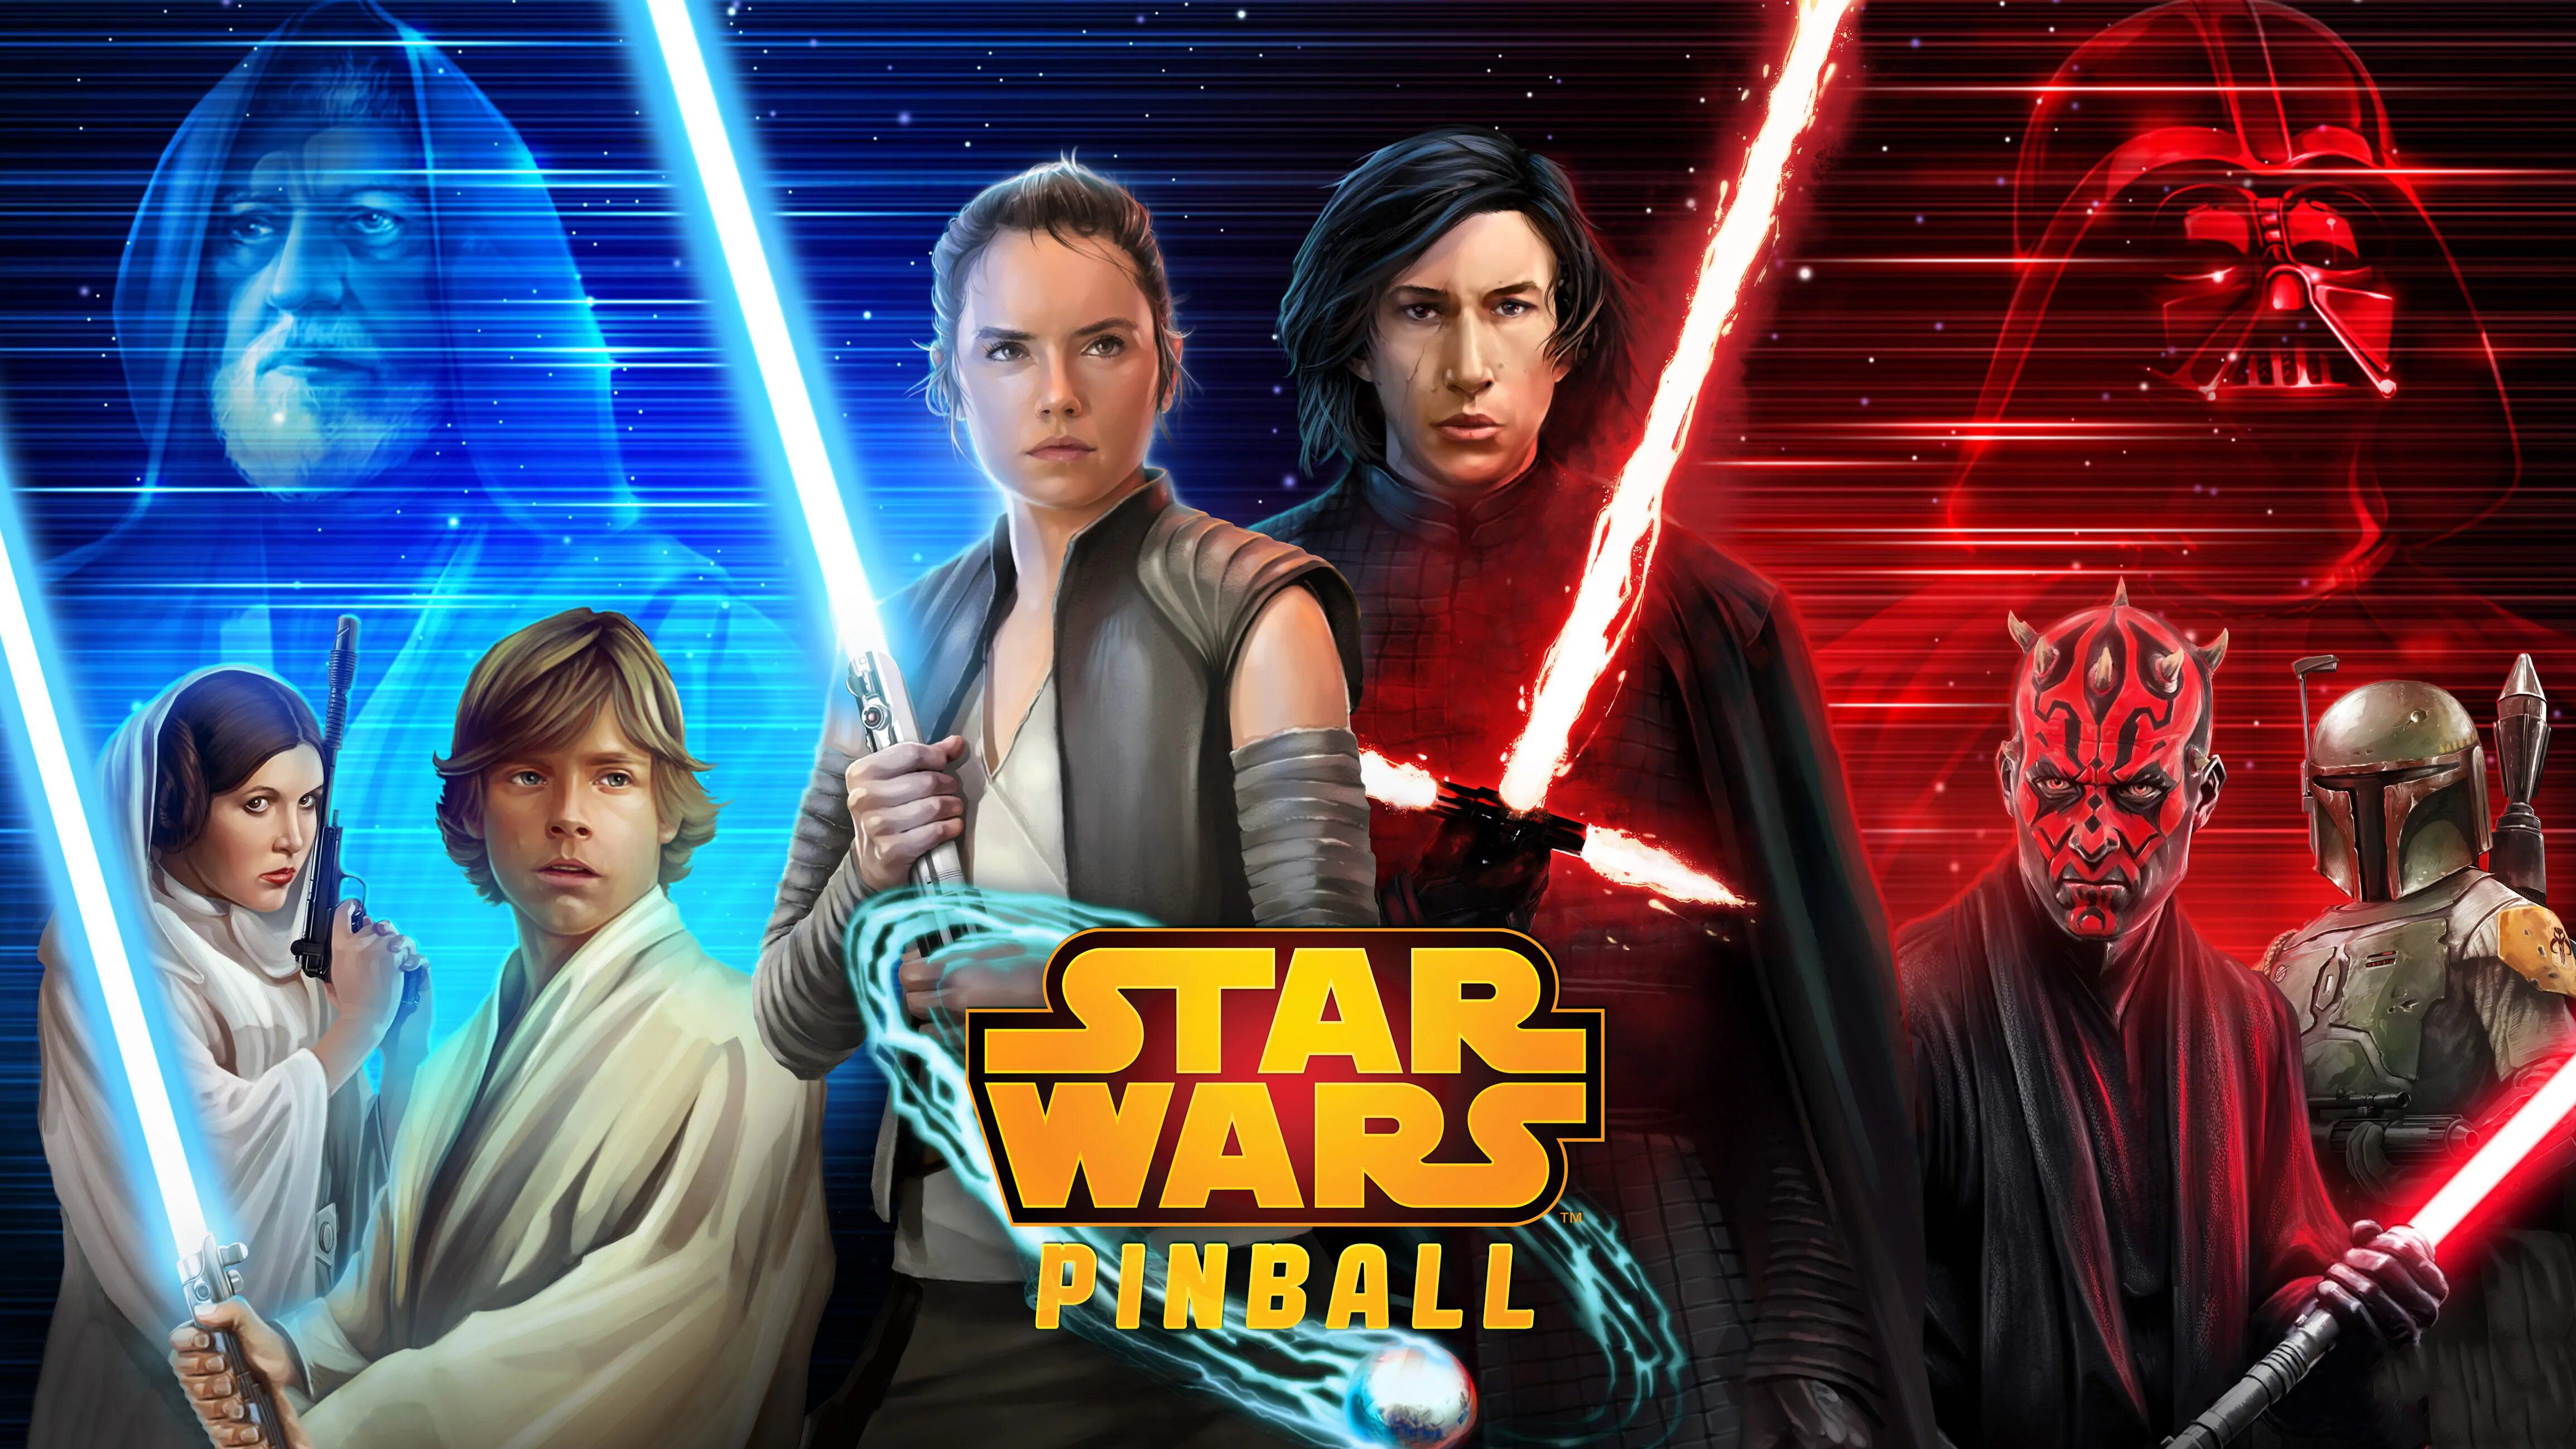 Star Wars Pinball, HD Games, 4k Wallpaper, Image, Background